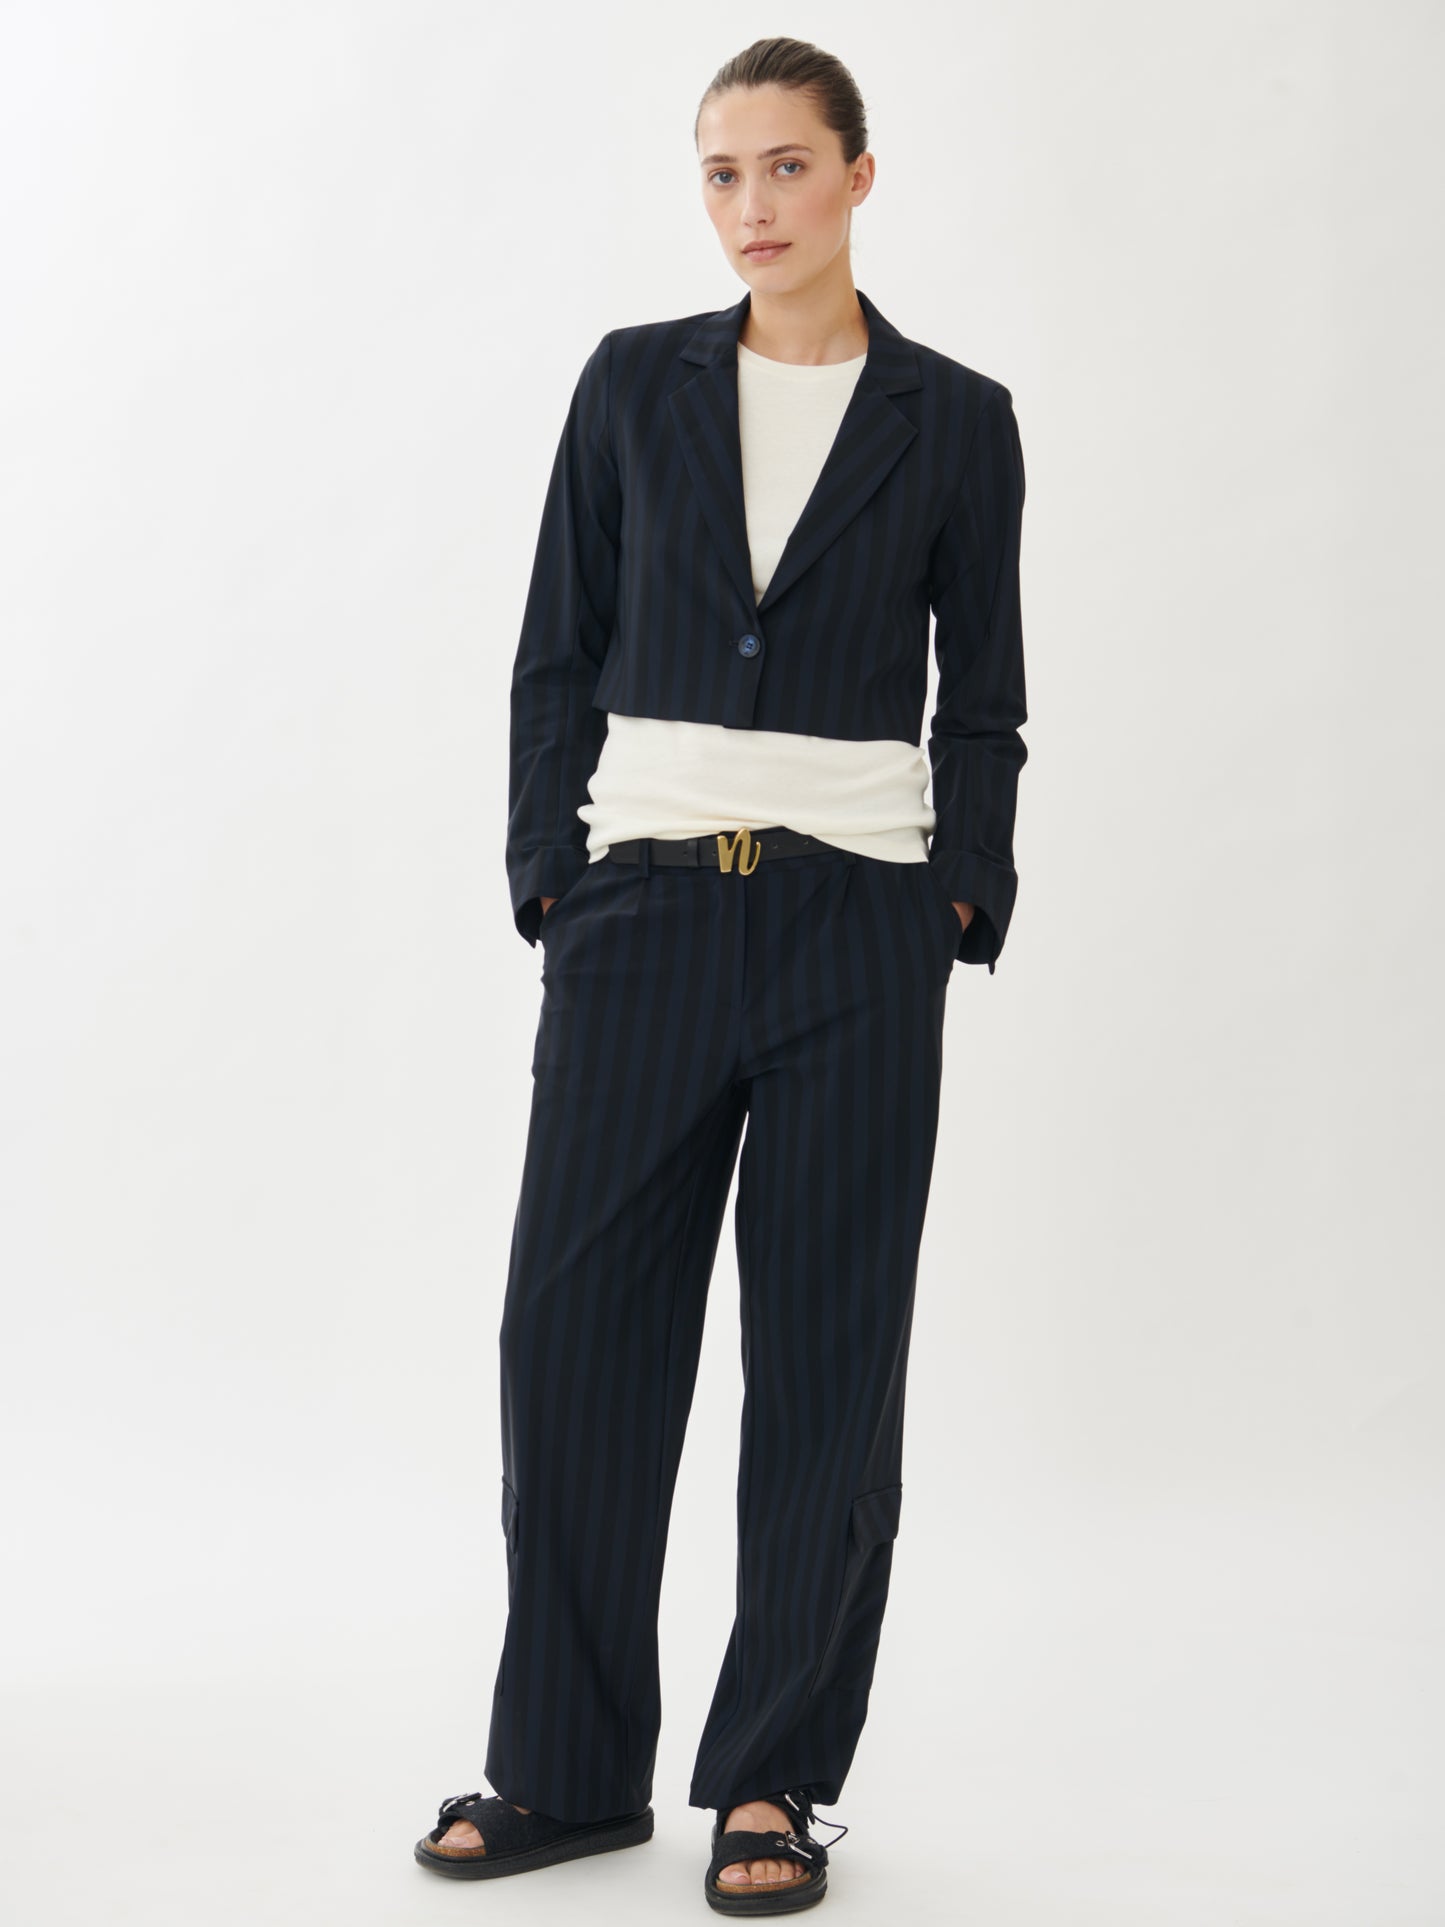 Estelle Short Navy & Black Stripe Blazer